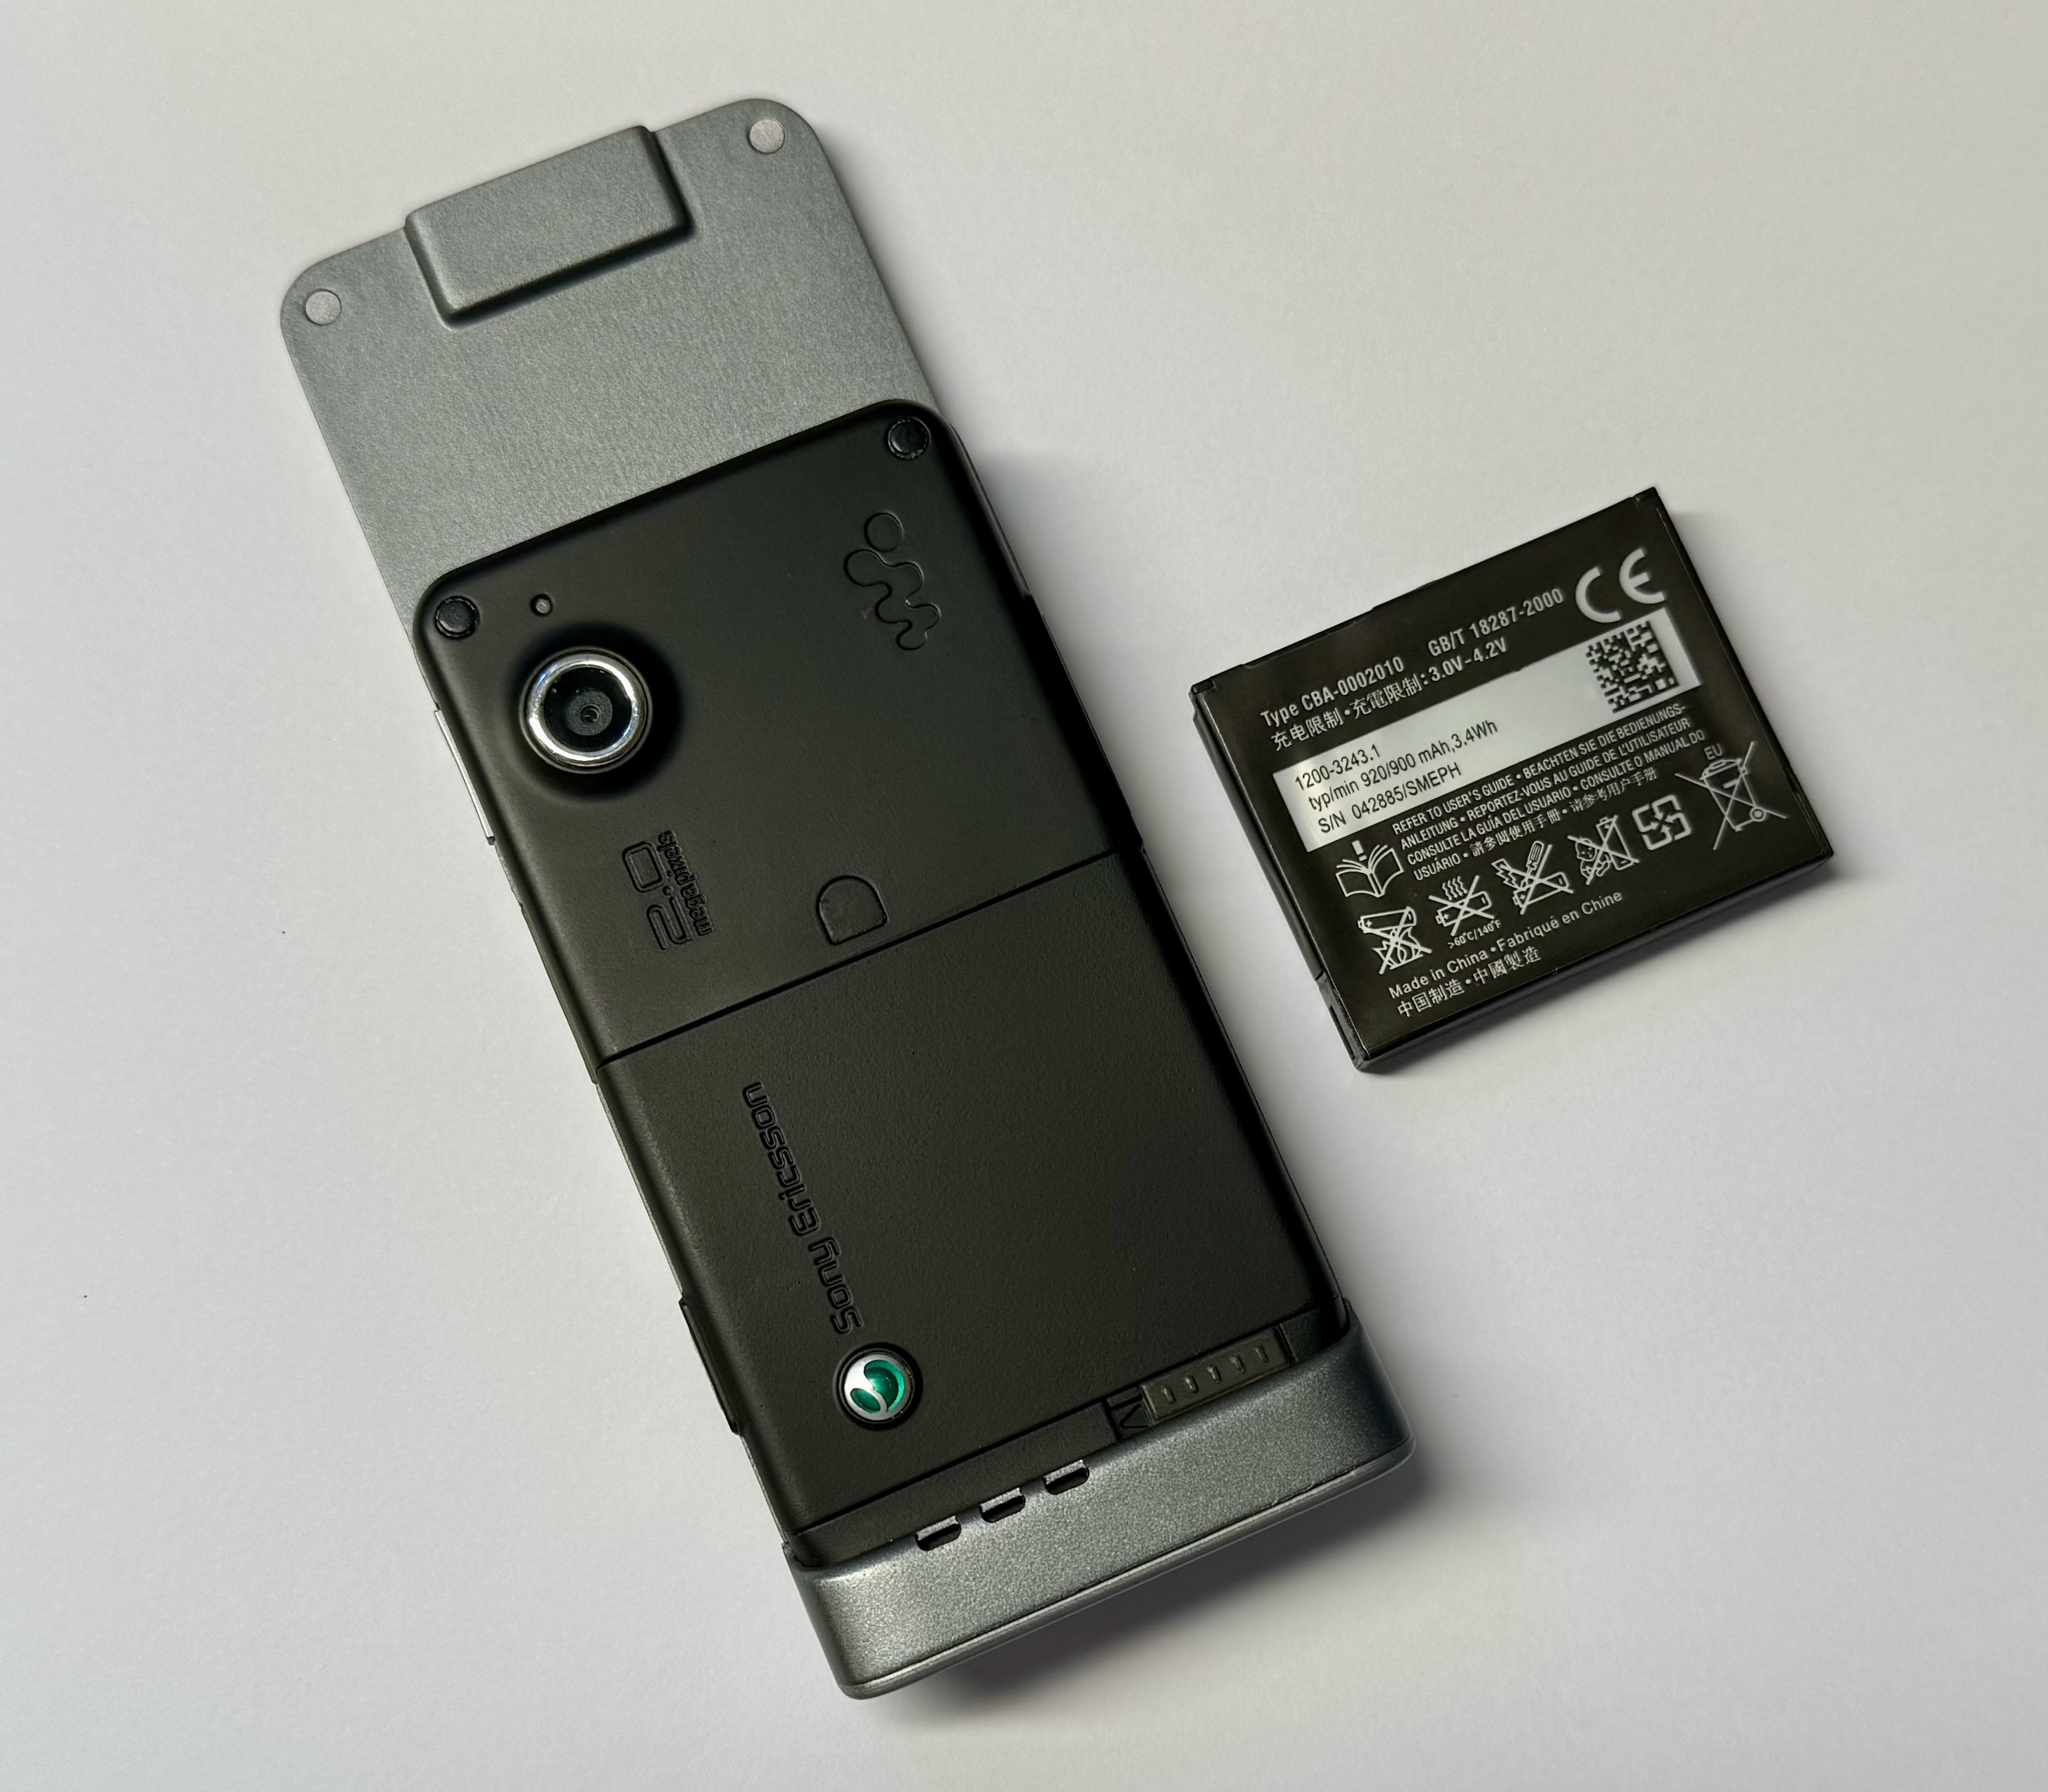 Sony Ericsson W910i Walkman Tasten-Handy Bluetooth 2MP-Kamera MP3 UMTS (generalüberholt)